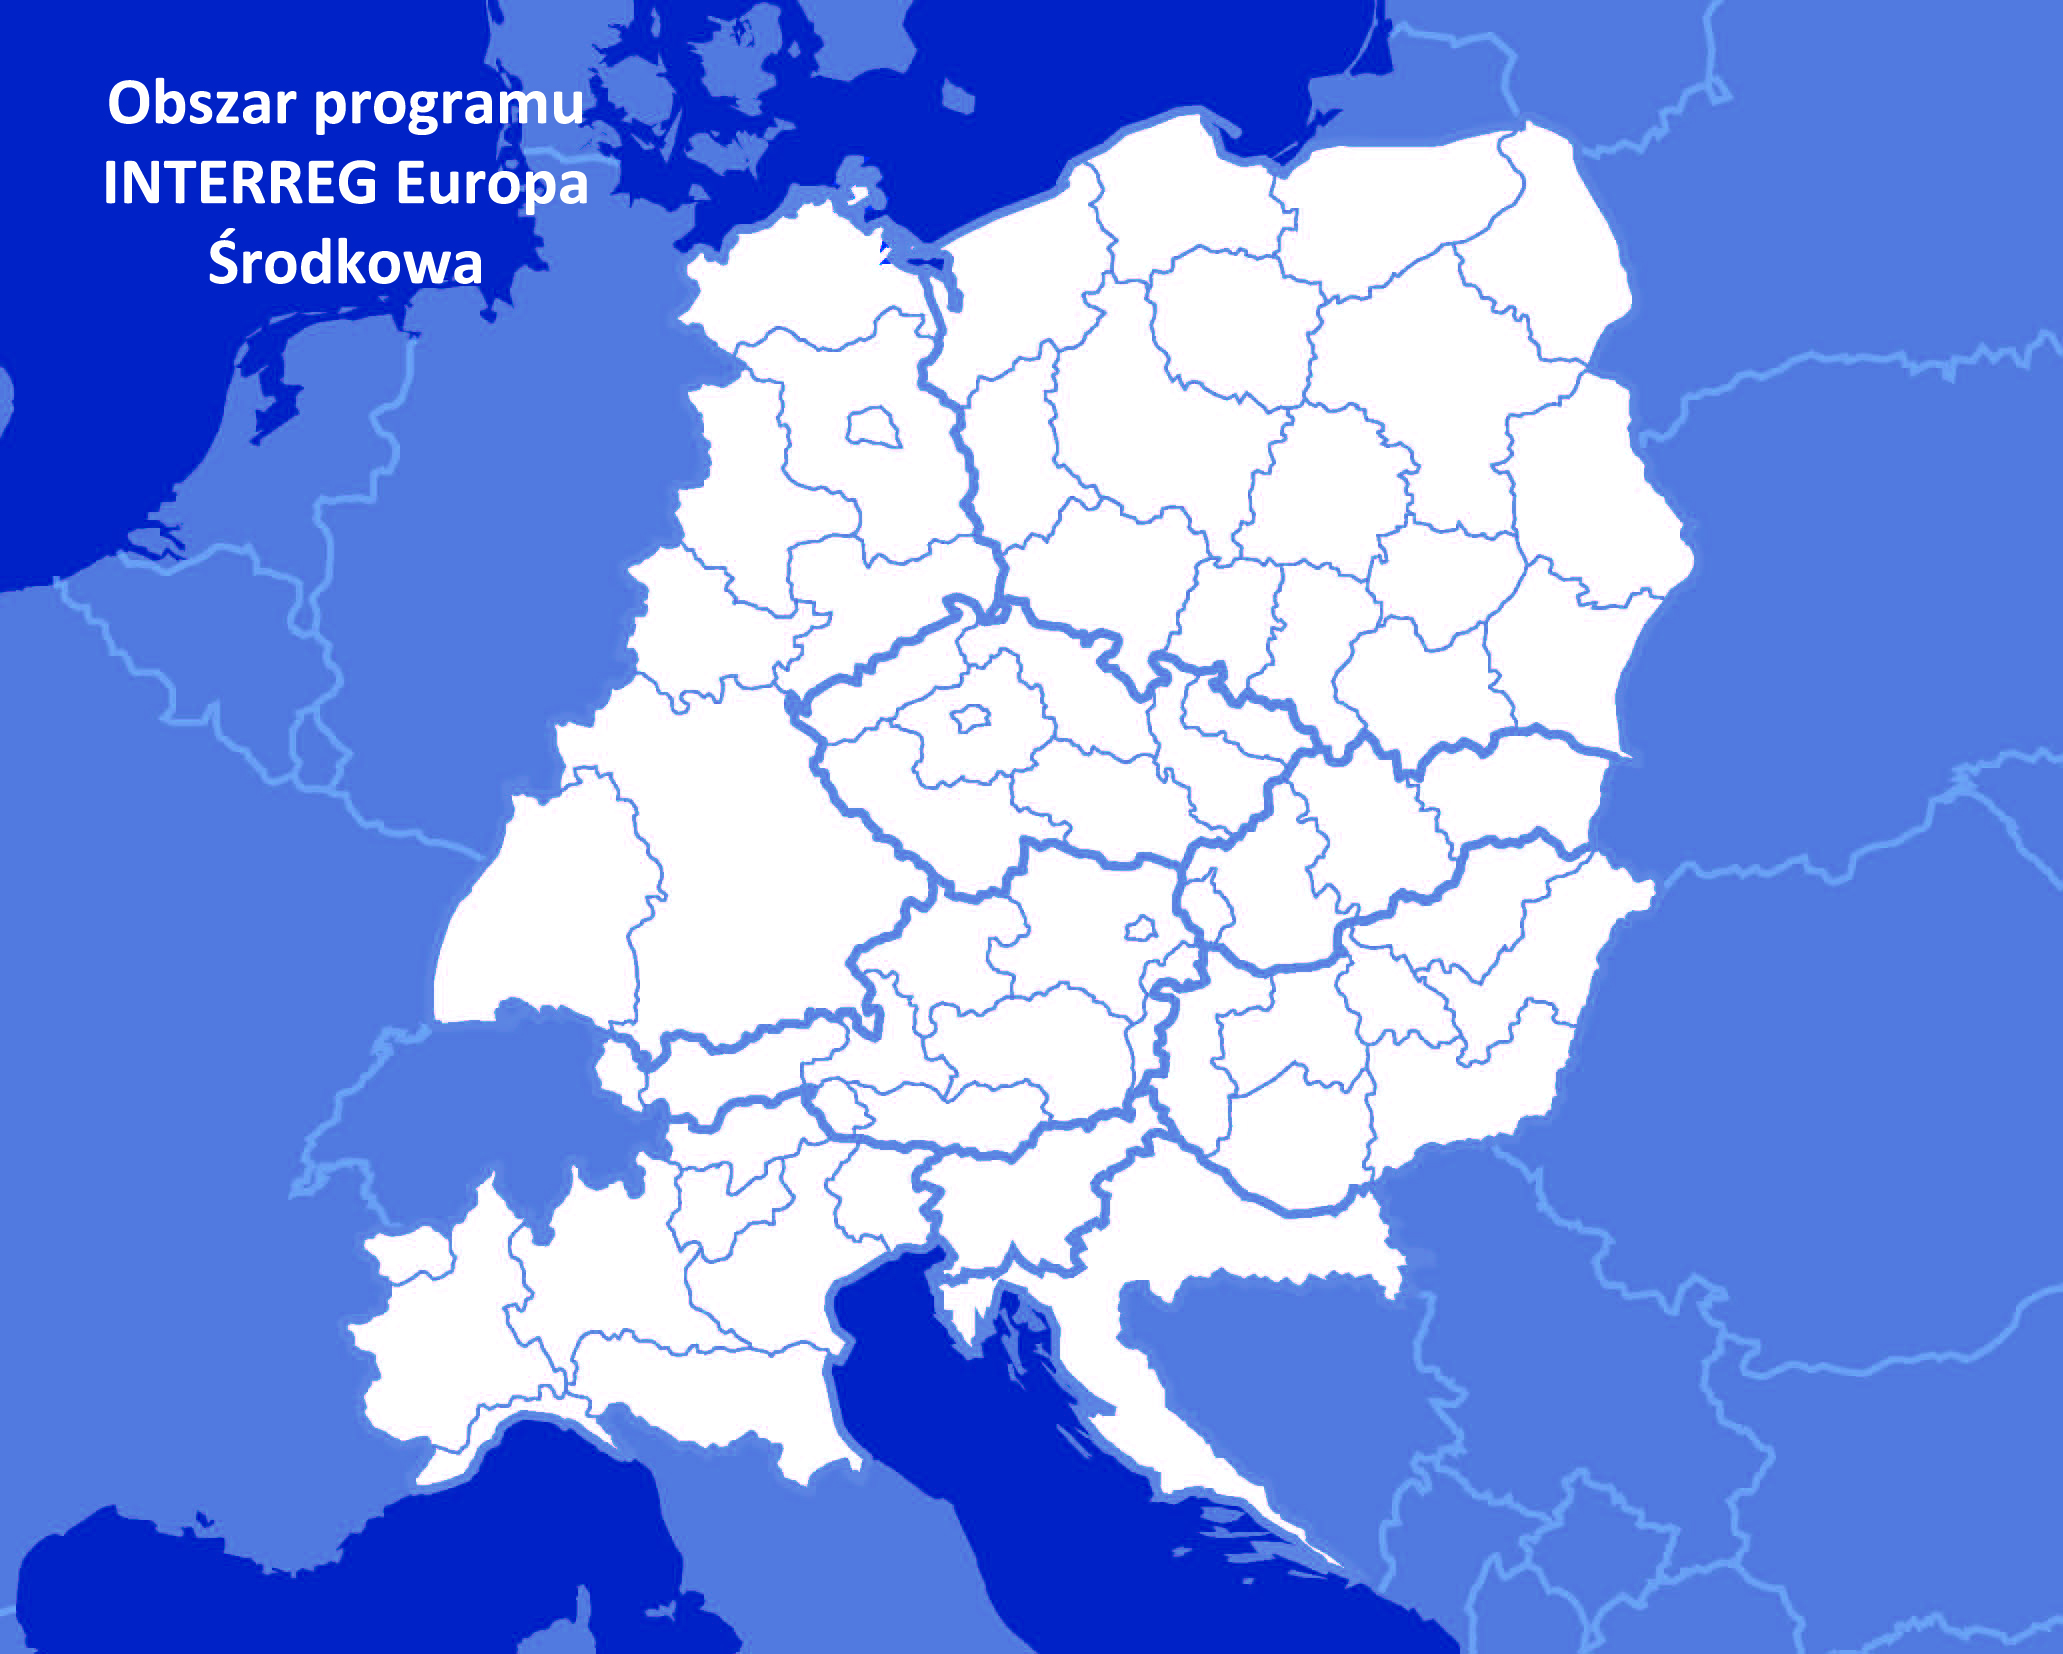 ICE - mapa - obszar programu INTERREG Europa Środkowa